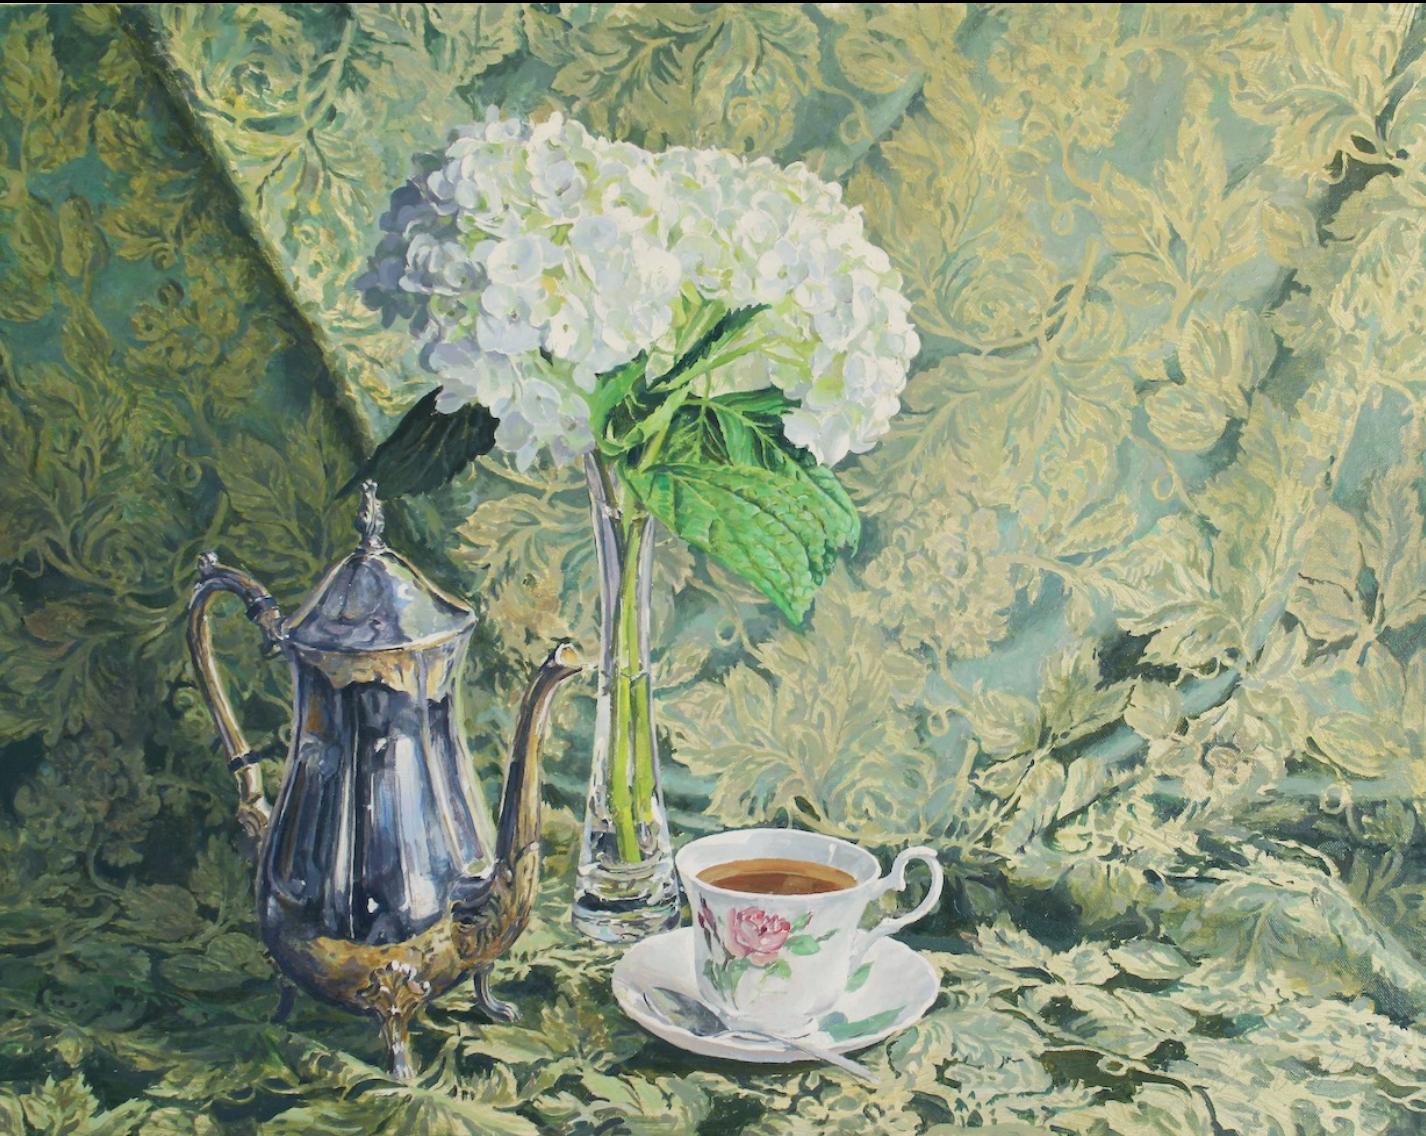 Dahl Taylor, "Hydrangeas and Silver Teapot", 28x34 Tea Still Life Oil Painting 